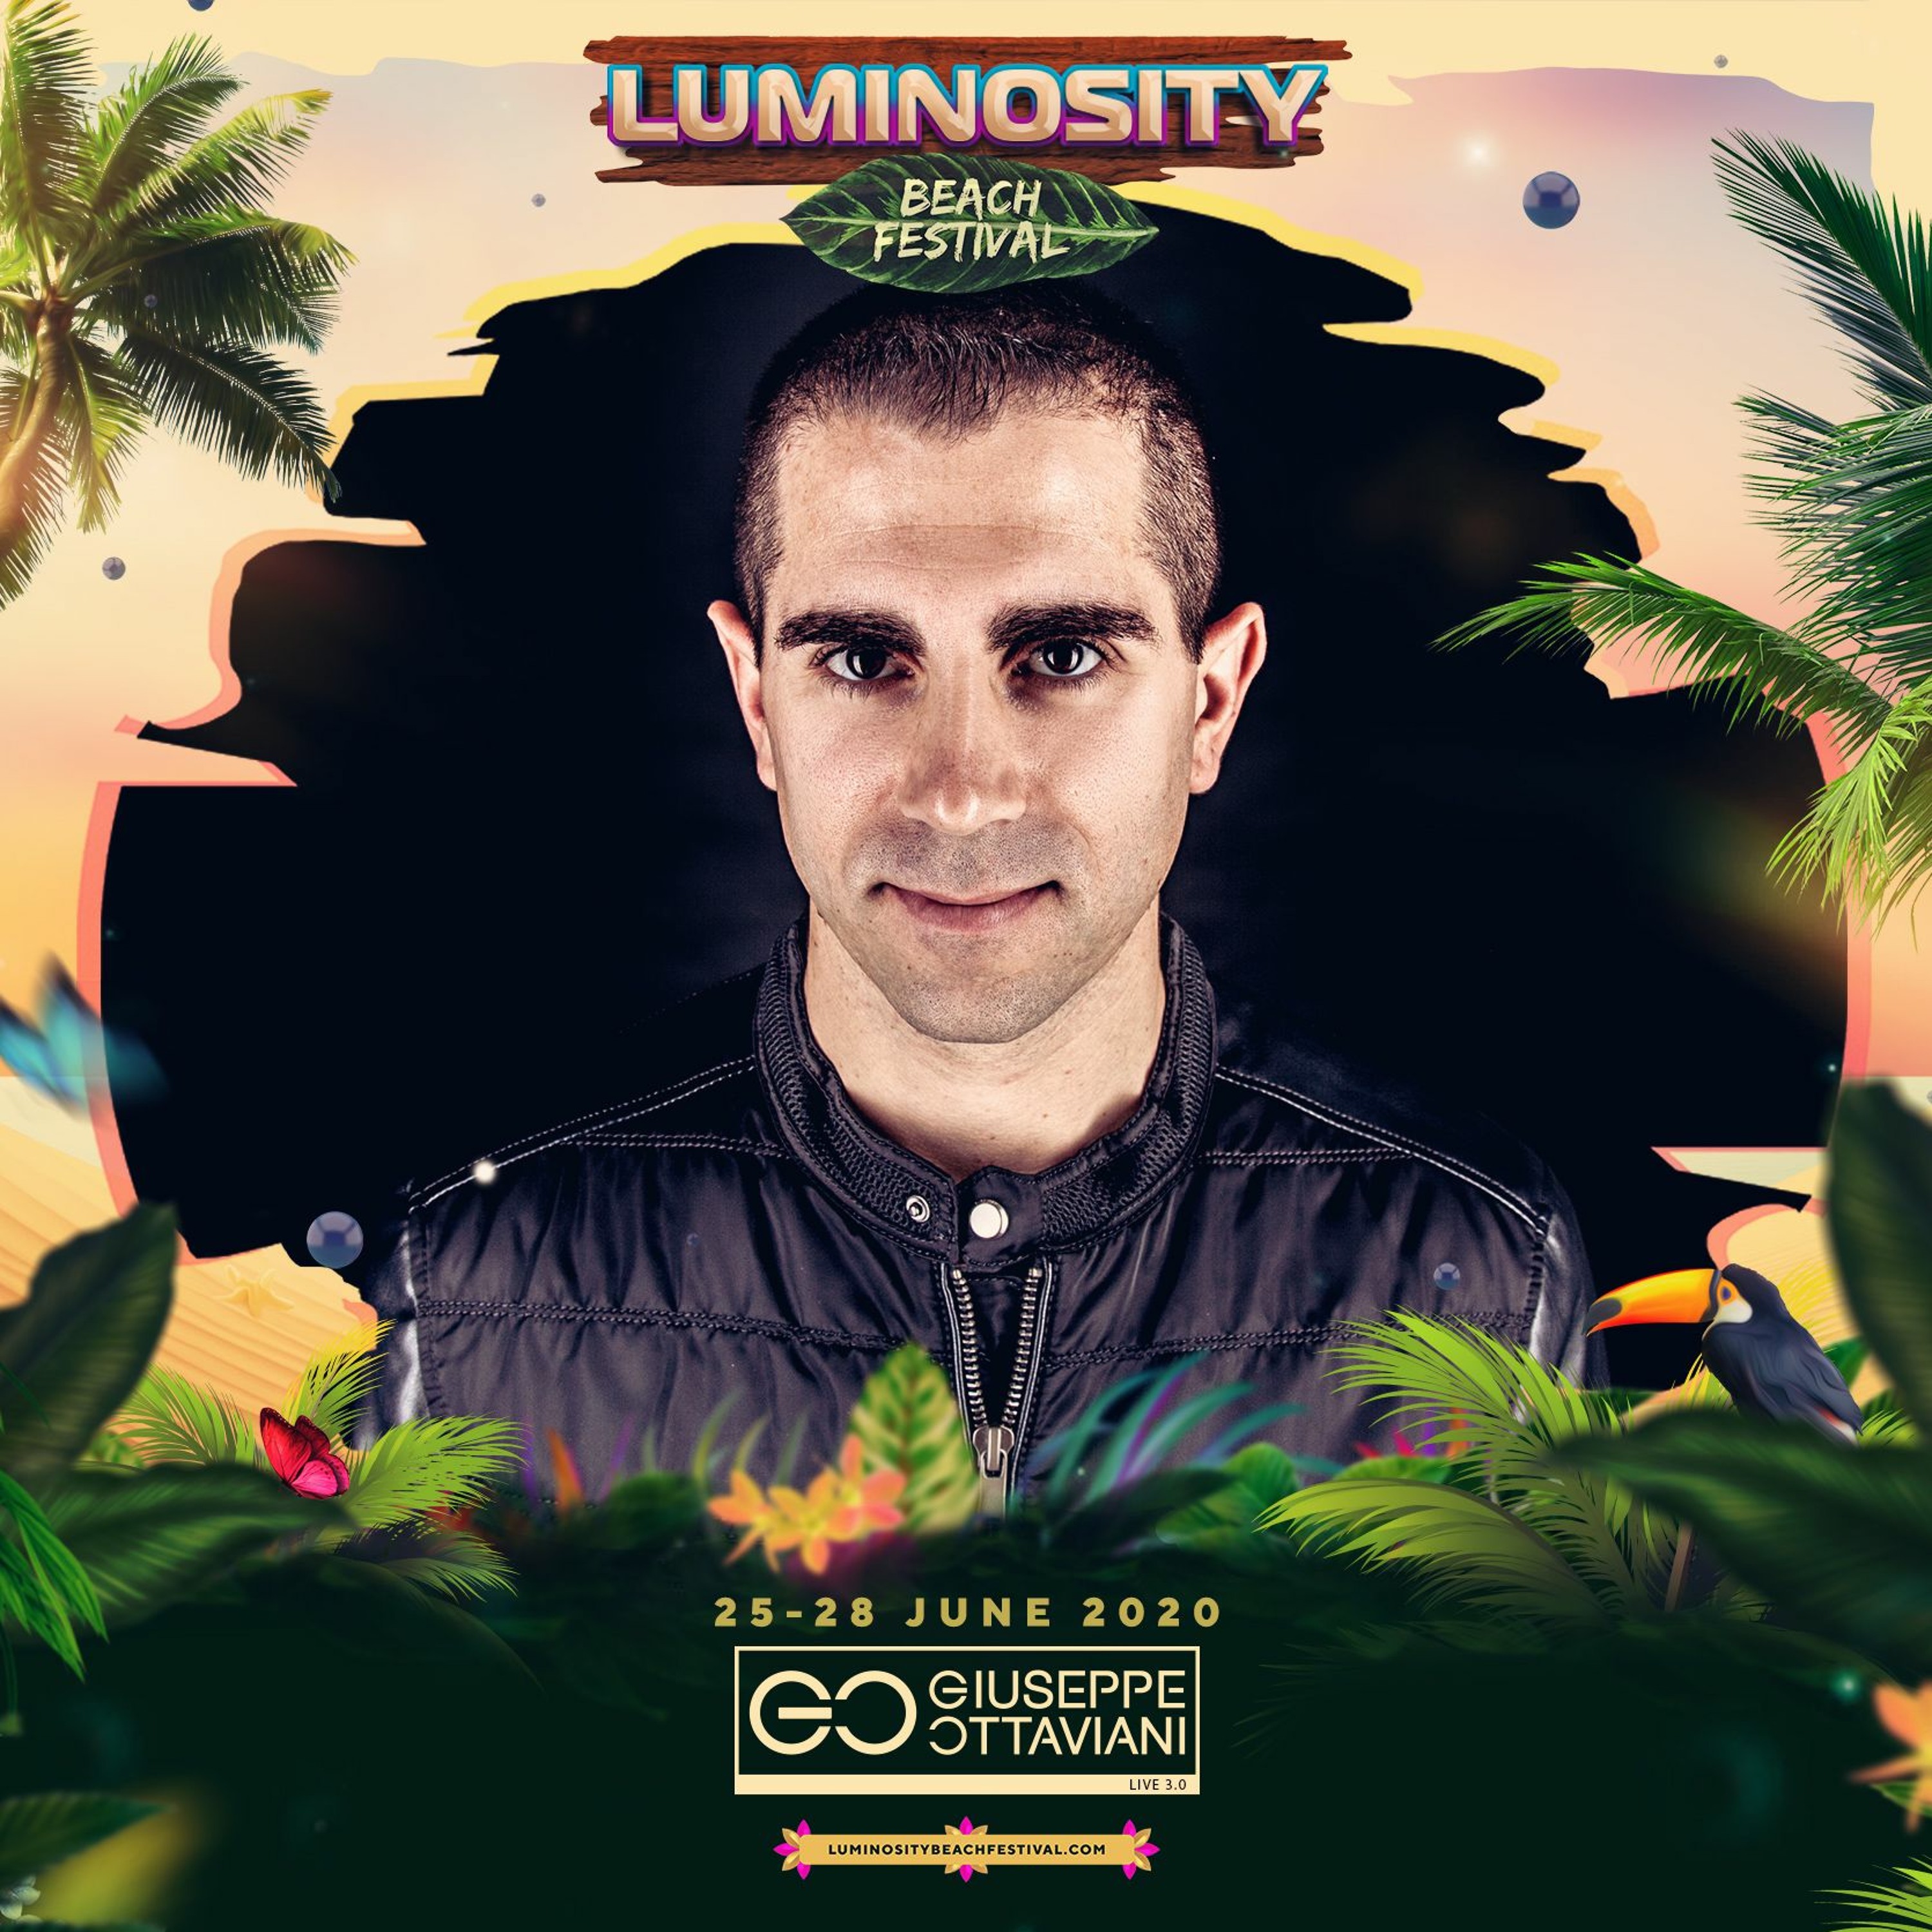 Giuseppe Ottaviani - Luminosity Beach Festival 2020 - Broadcast